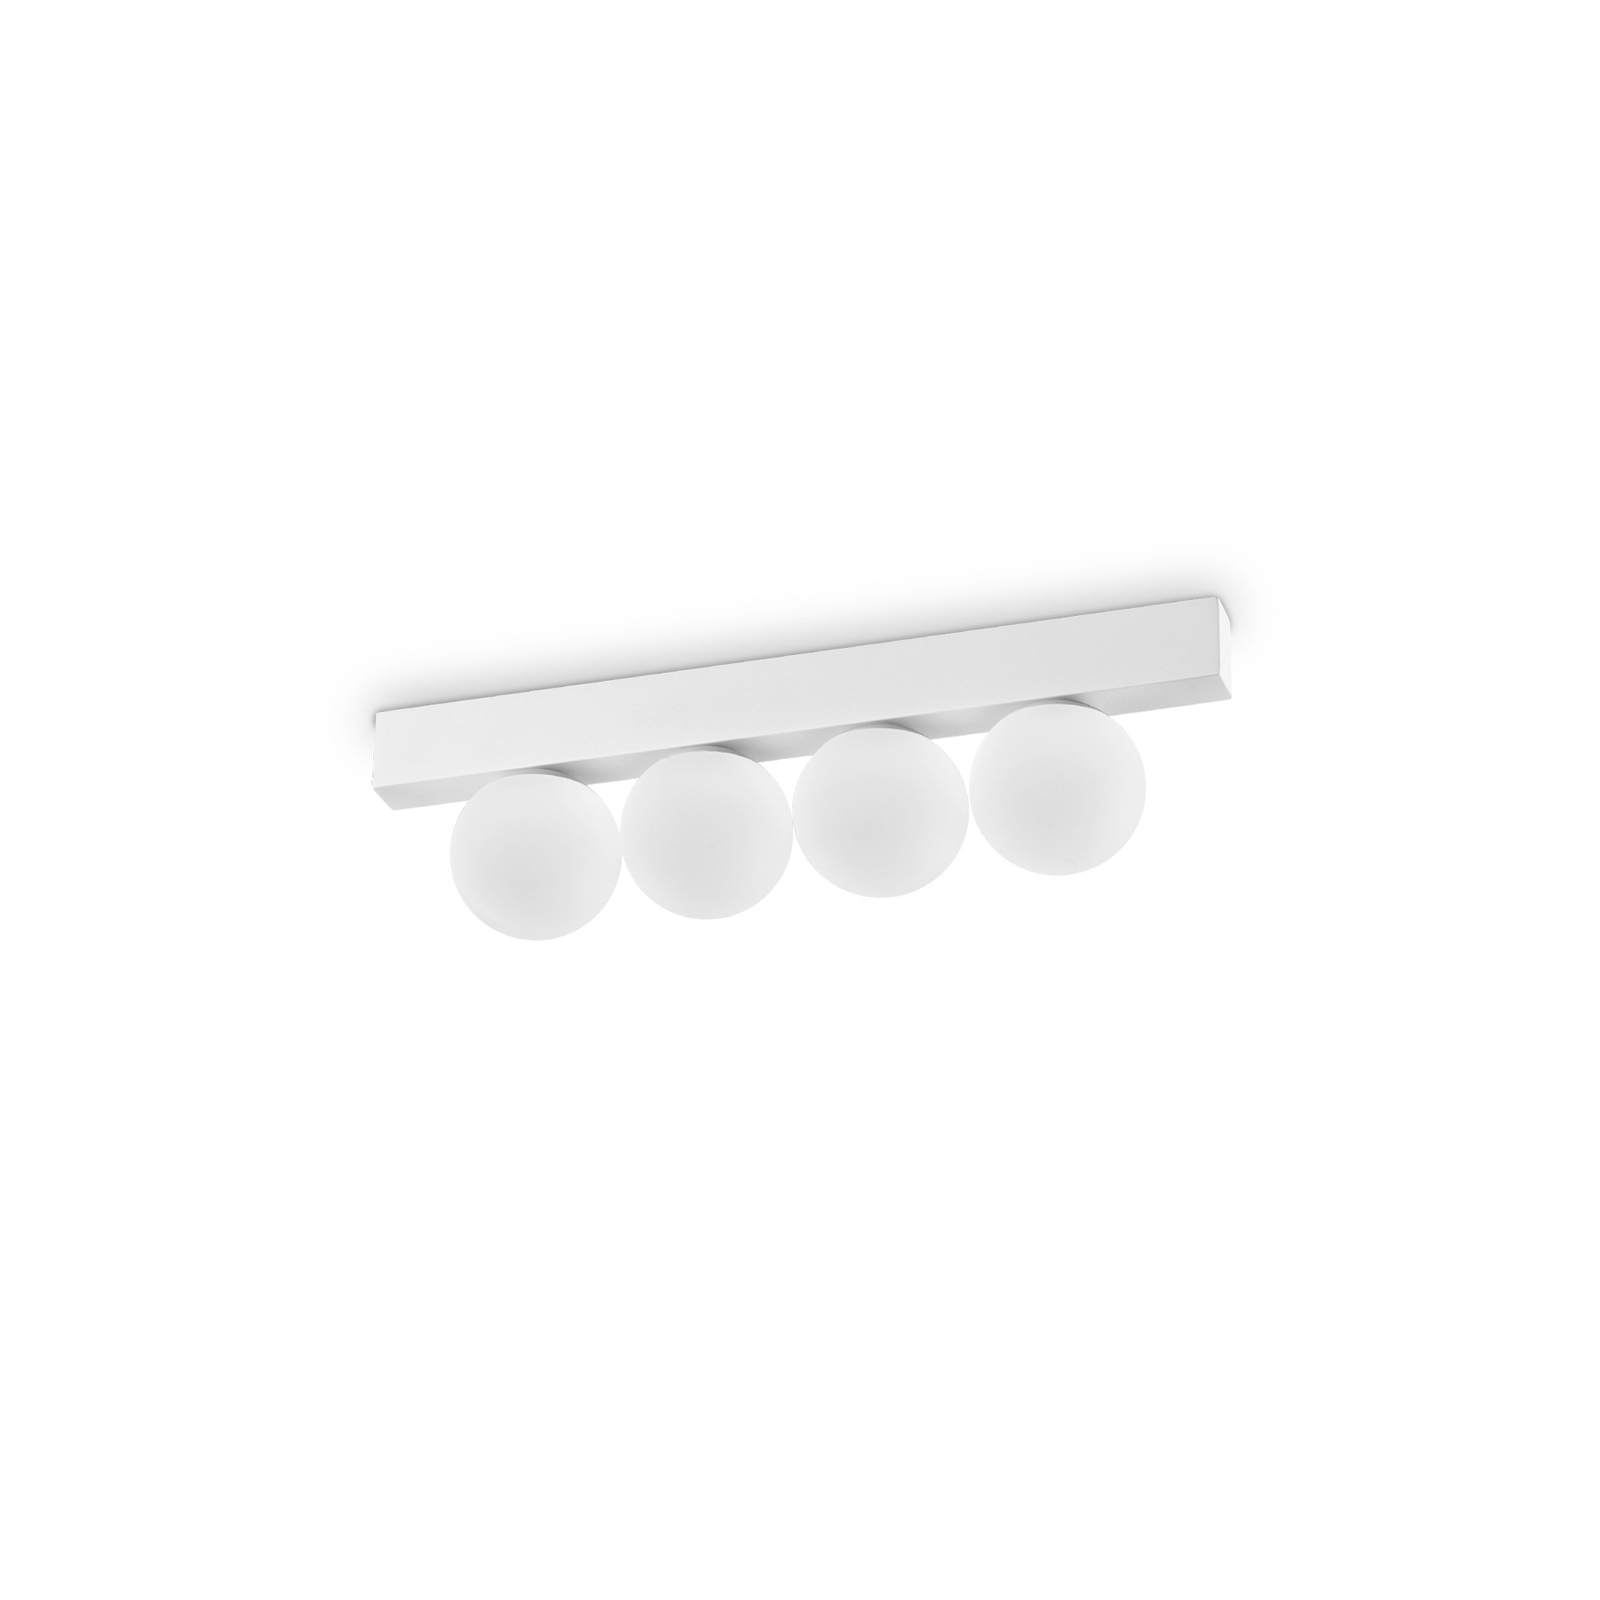 Ideal Lux Plafoniera Ping Pong bianca a 4 luci, vetro opalino